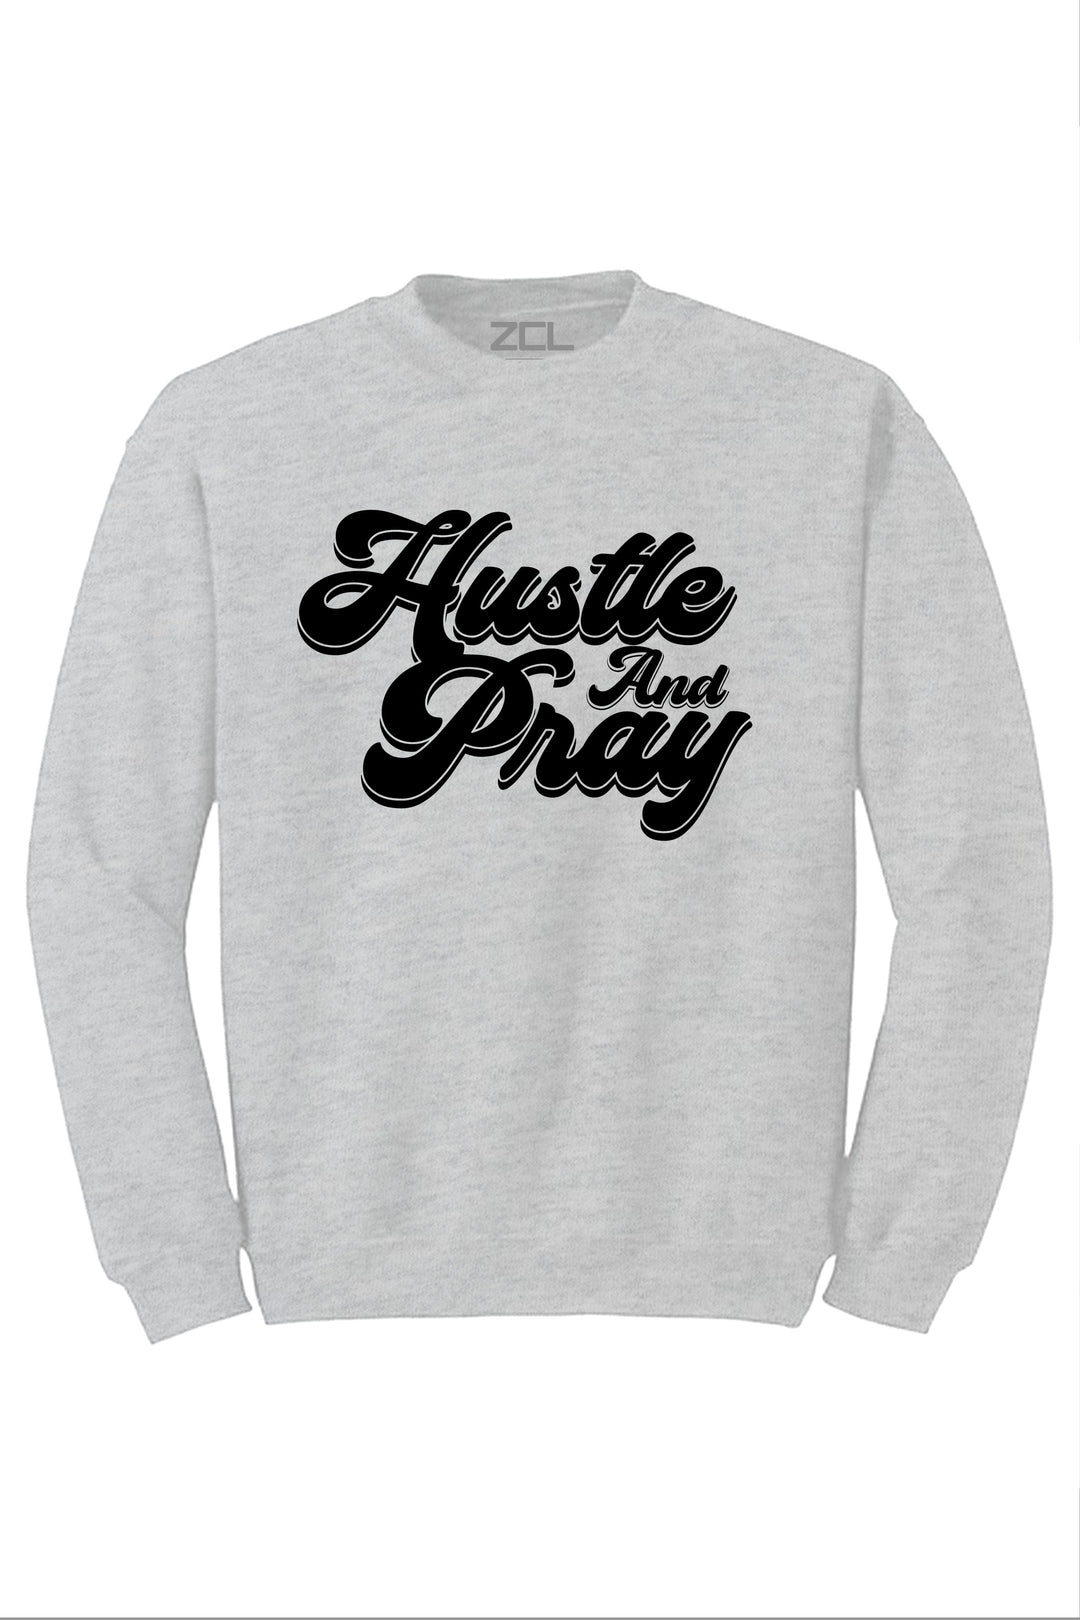 Hustle And Pray Crewneck Sweatshirt (Black Logo) - Zamage